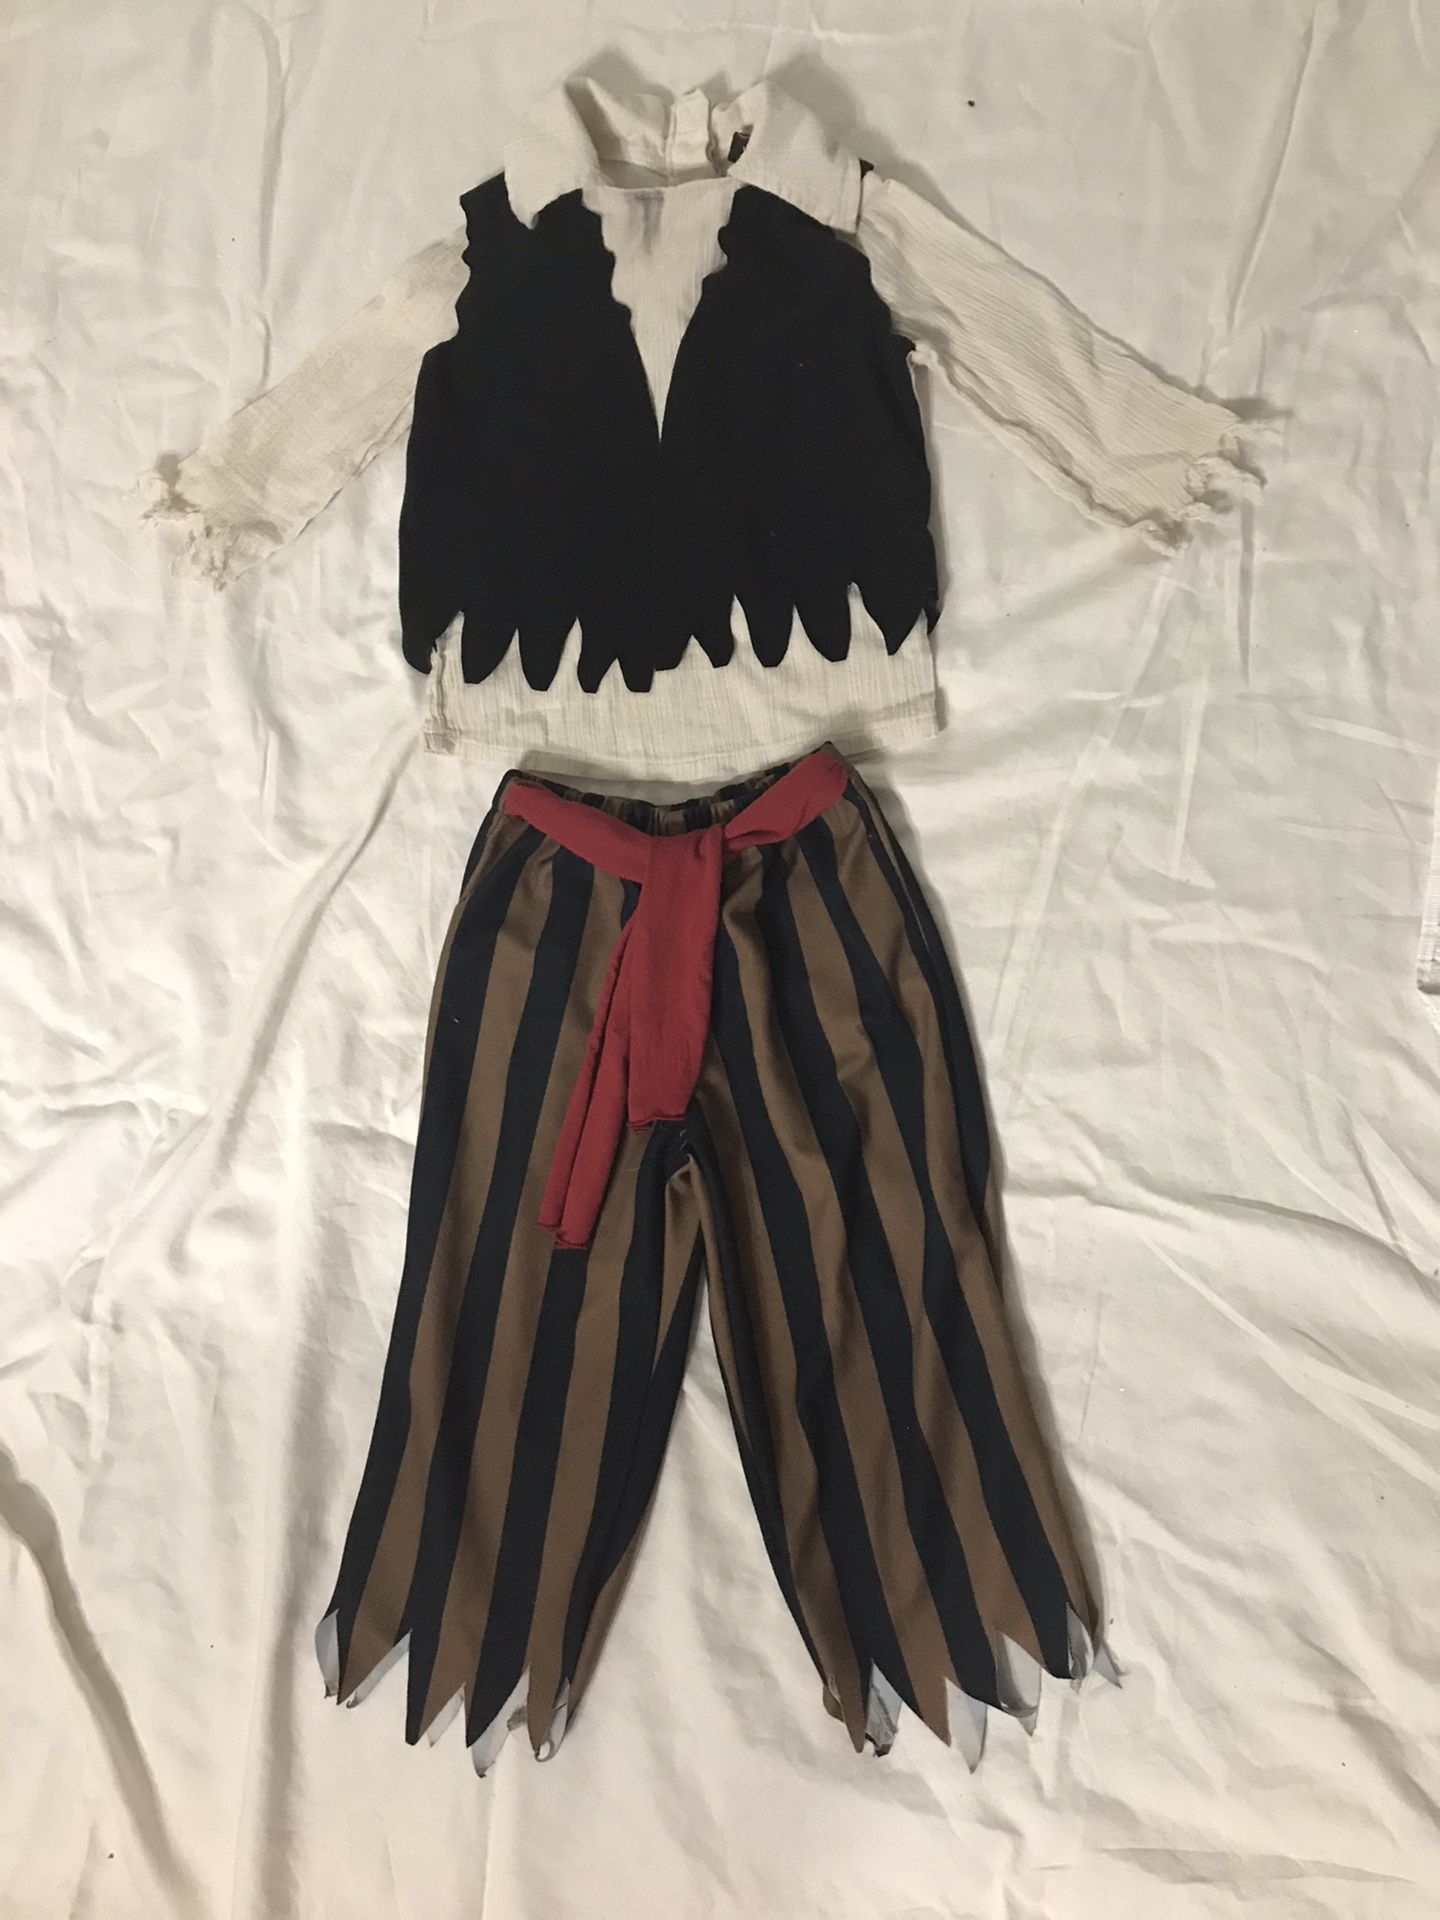 Pirate child’s costume